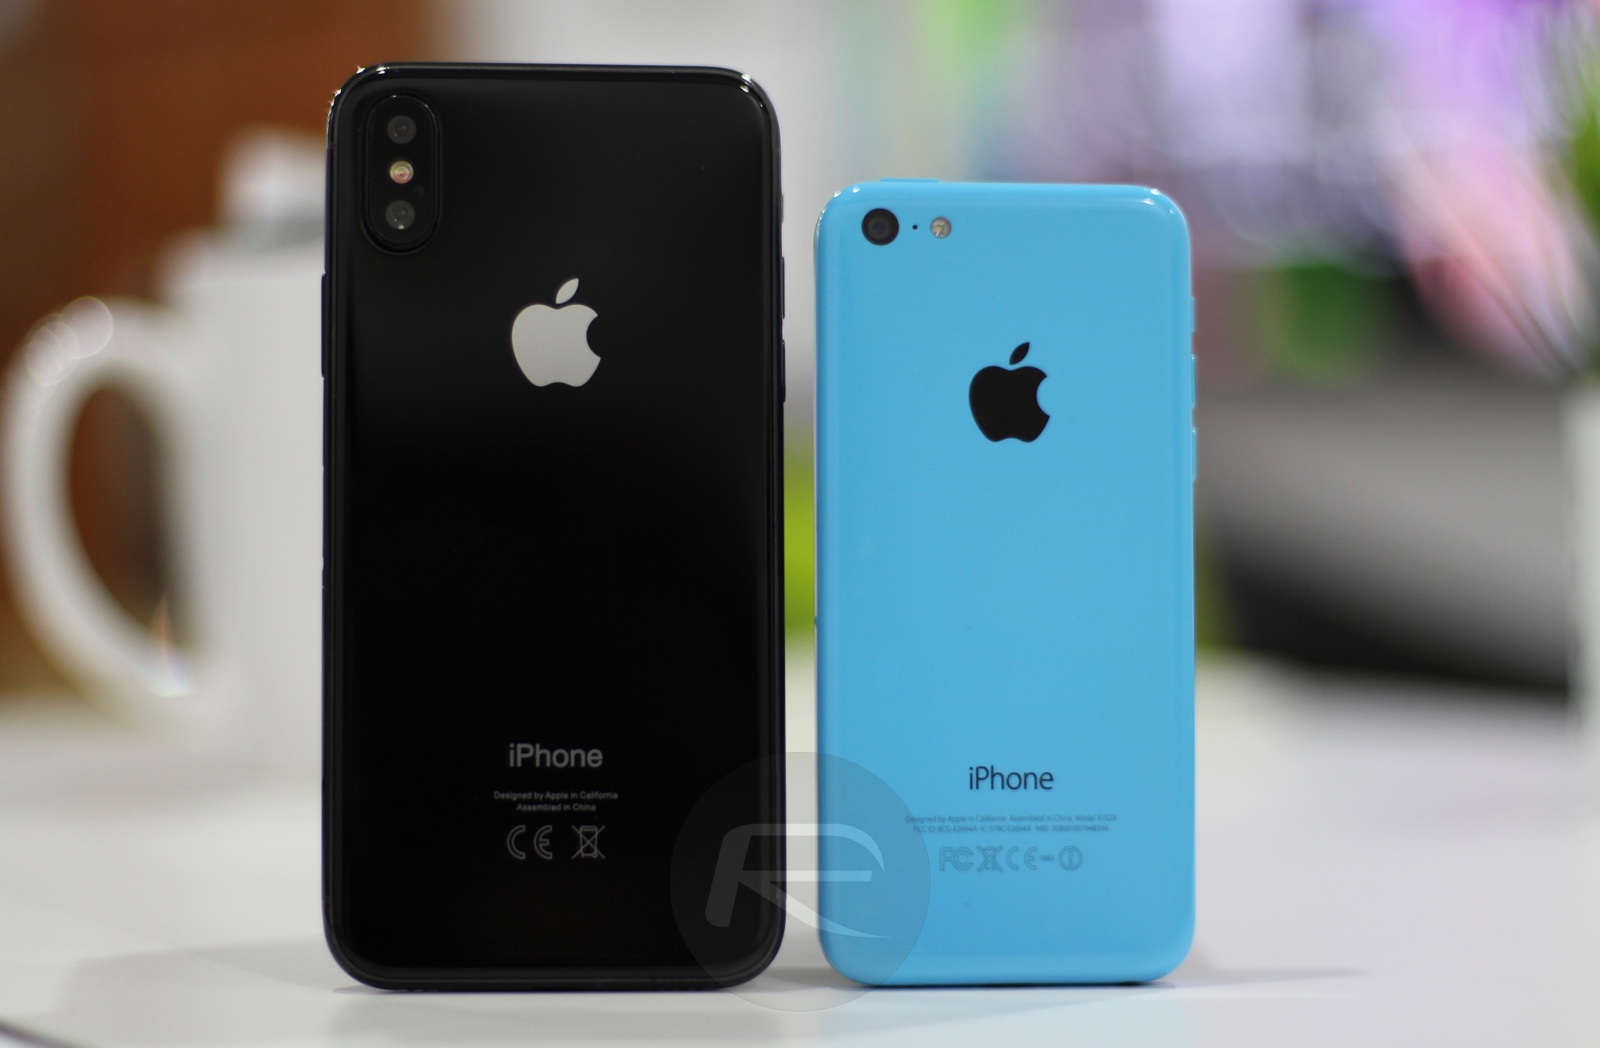 iPhone-8-black-with-iPhone-5c